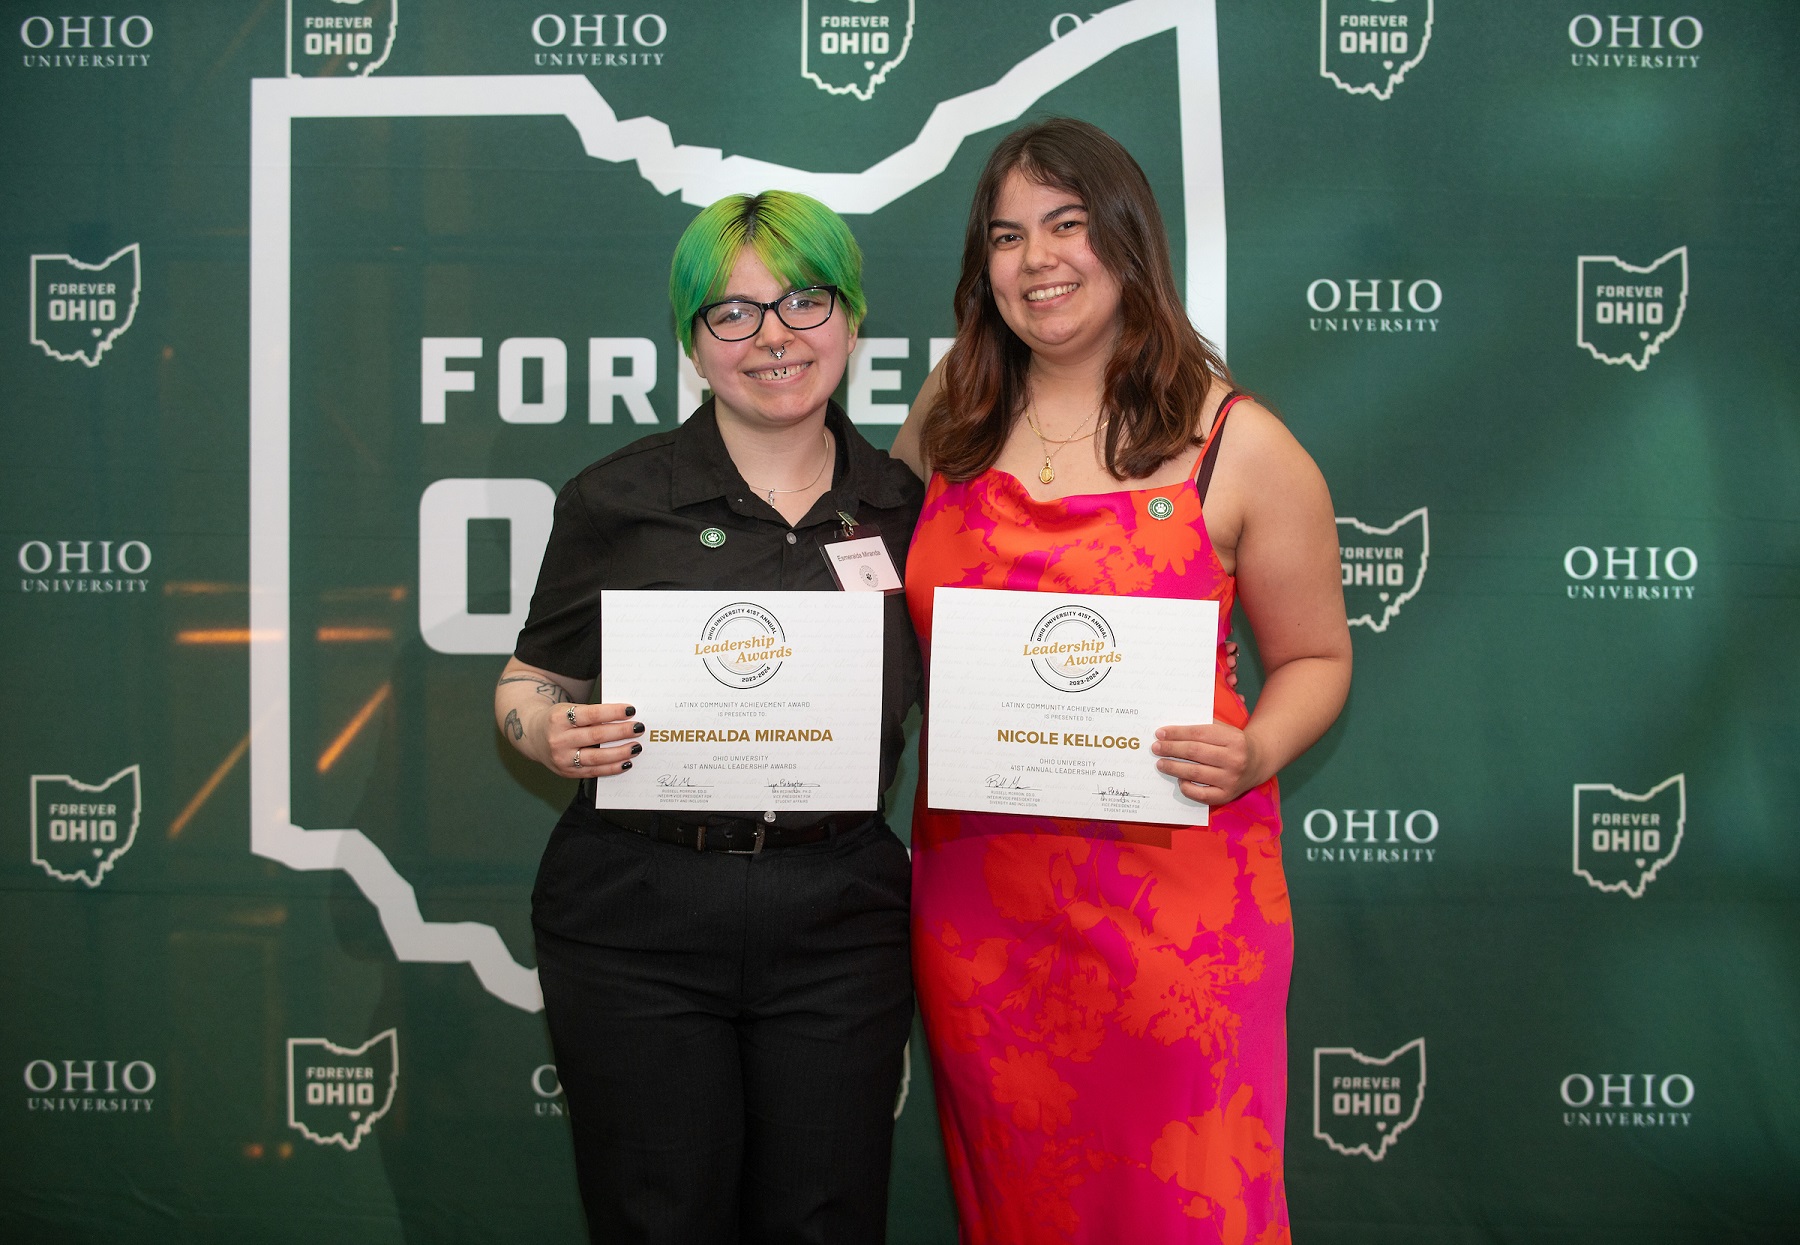 Esmeralda Miranda and Nicole Kellogg pose with their award certificates